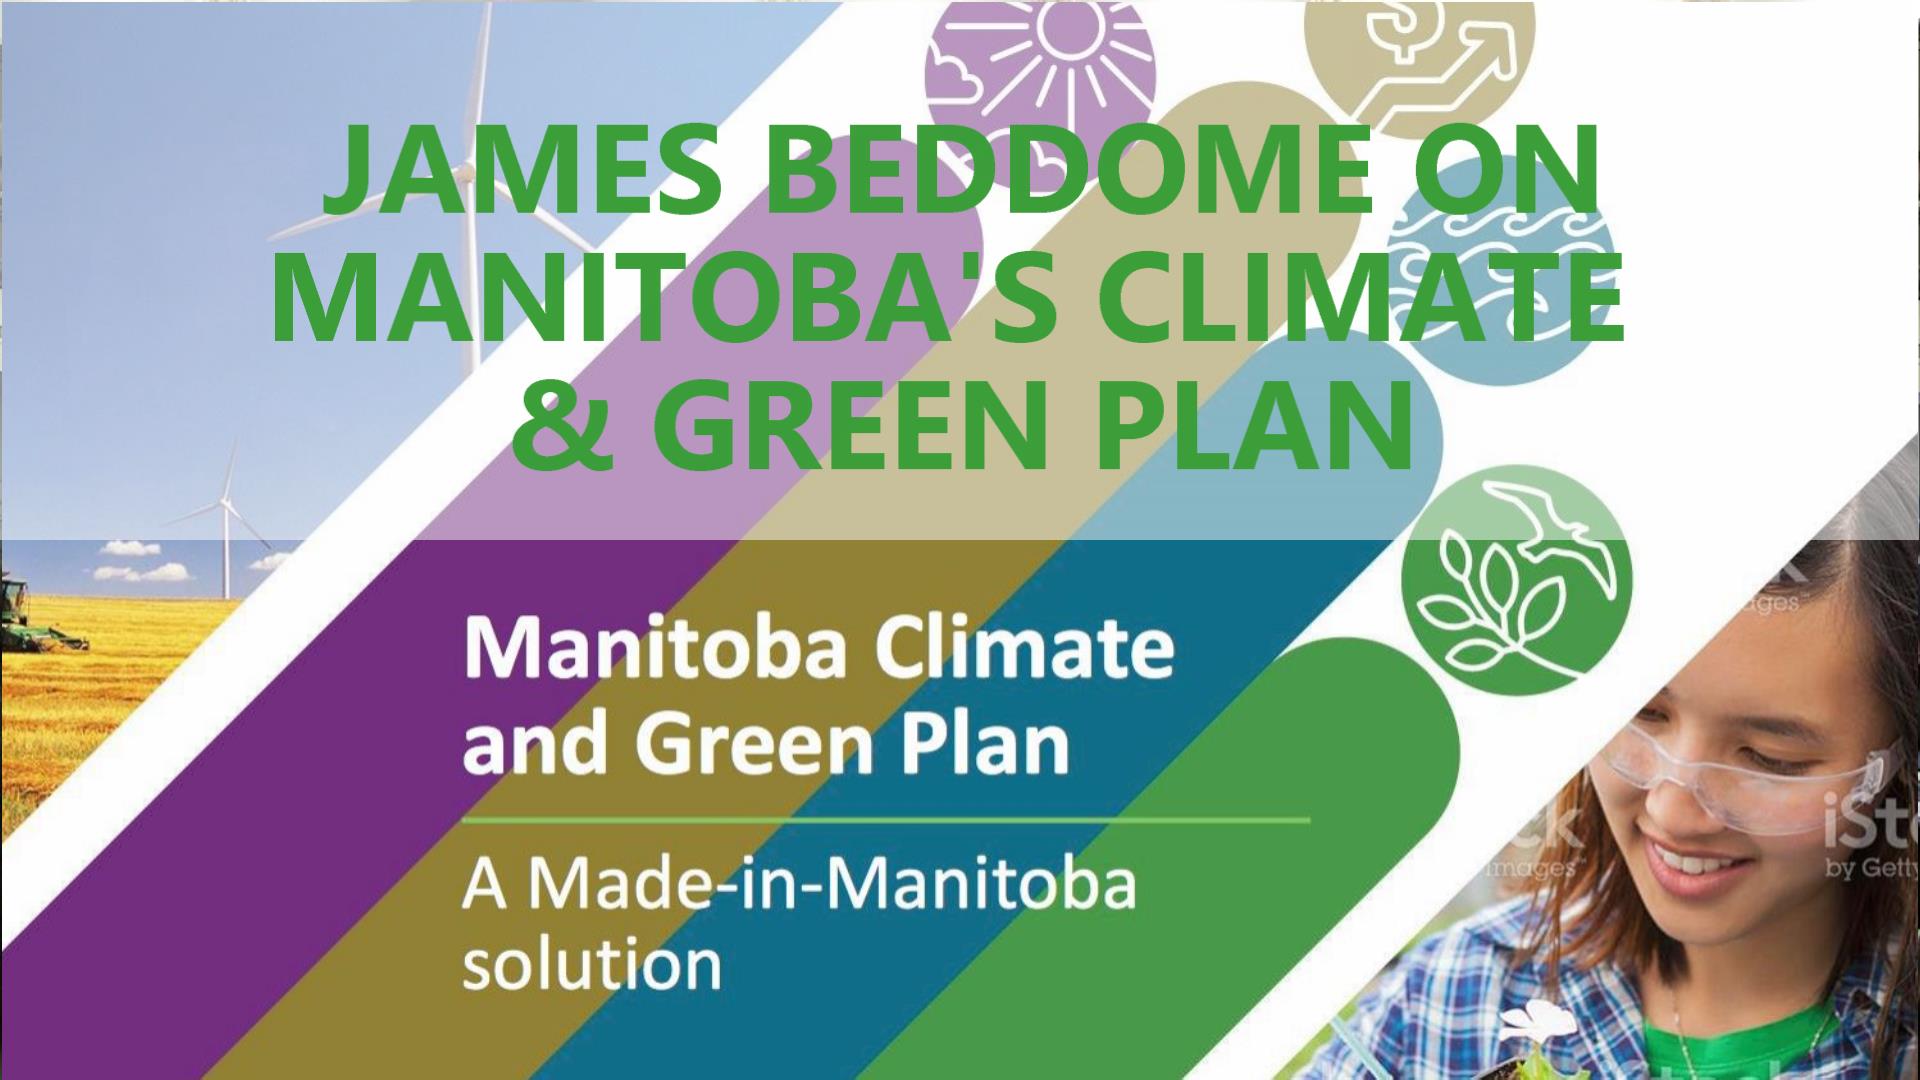 Beddome: Manitoba’s Climate Plan needs improvement